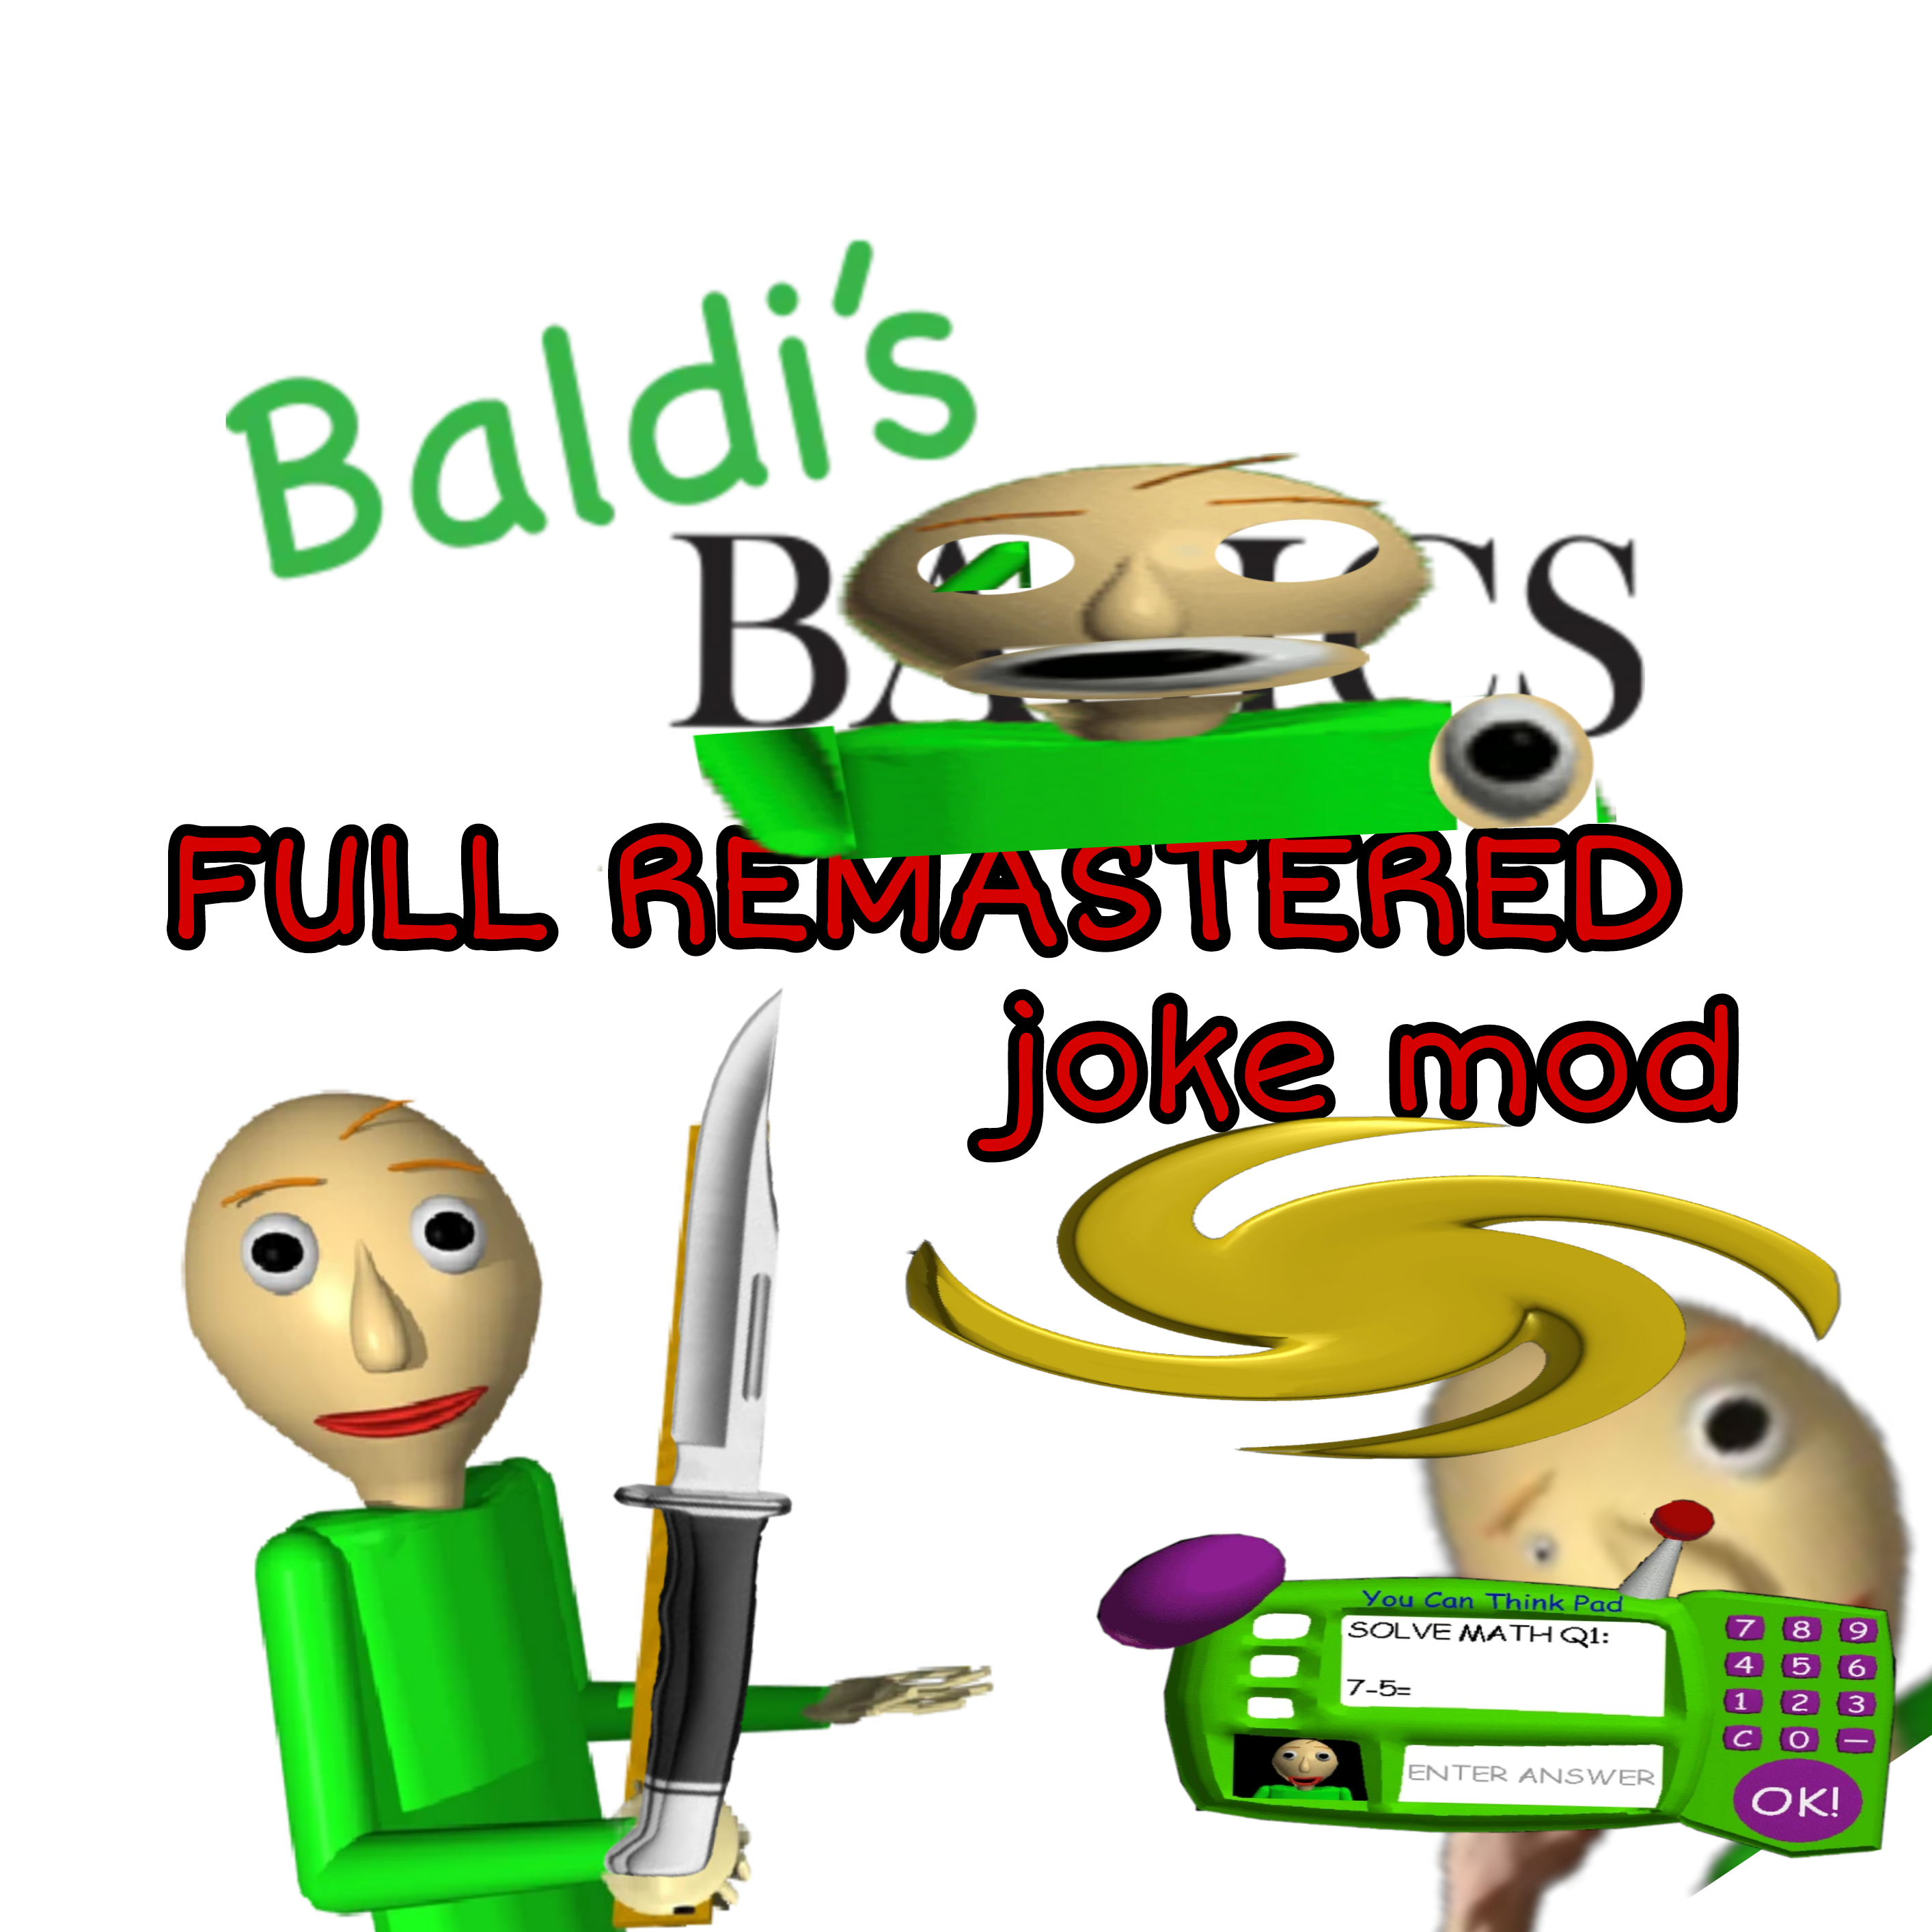 Baldi's basics full remastered by Daniilsuperx - Game Jolt